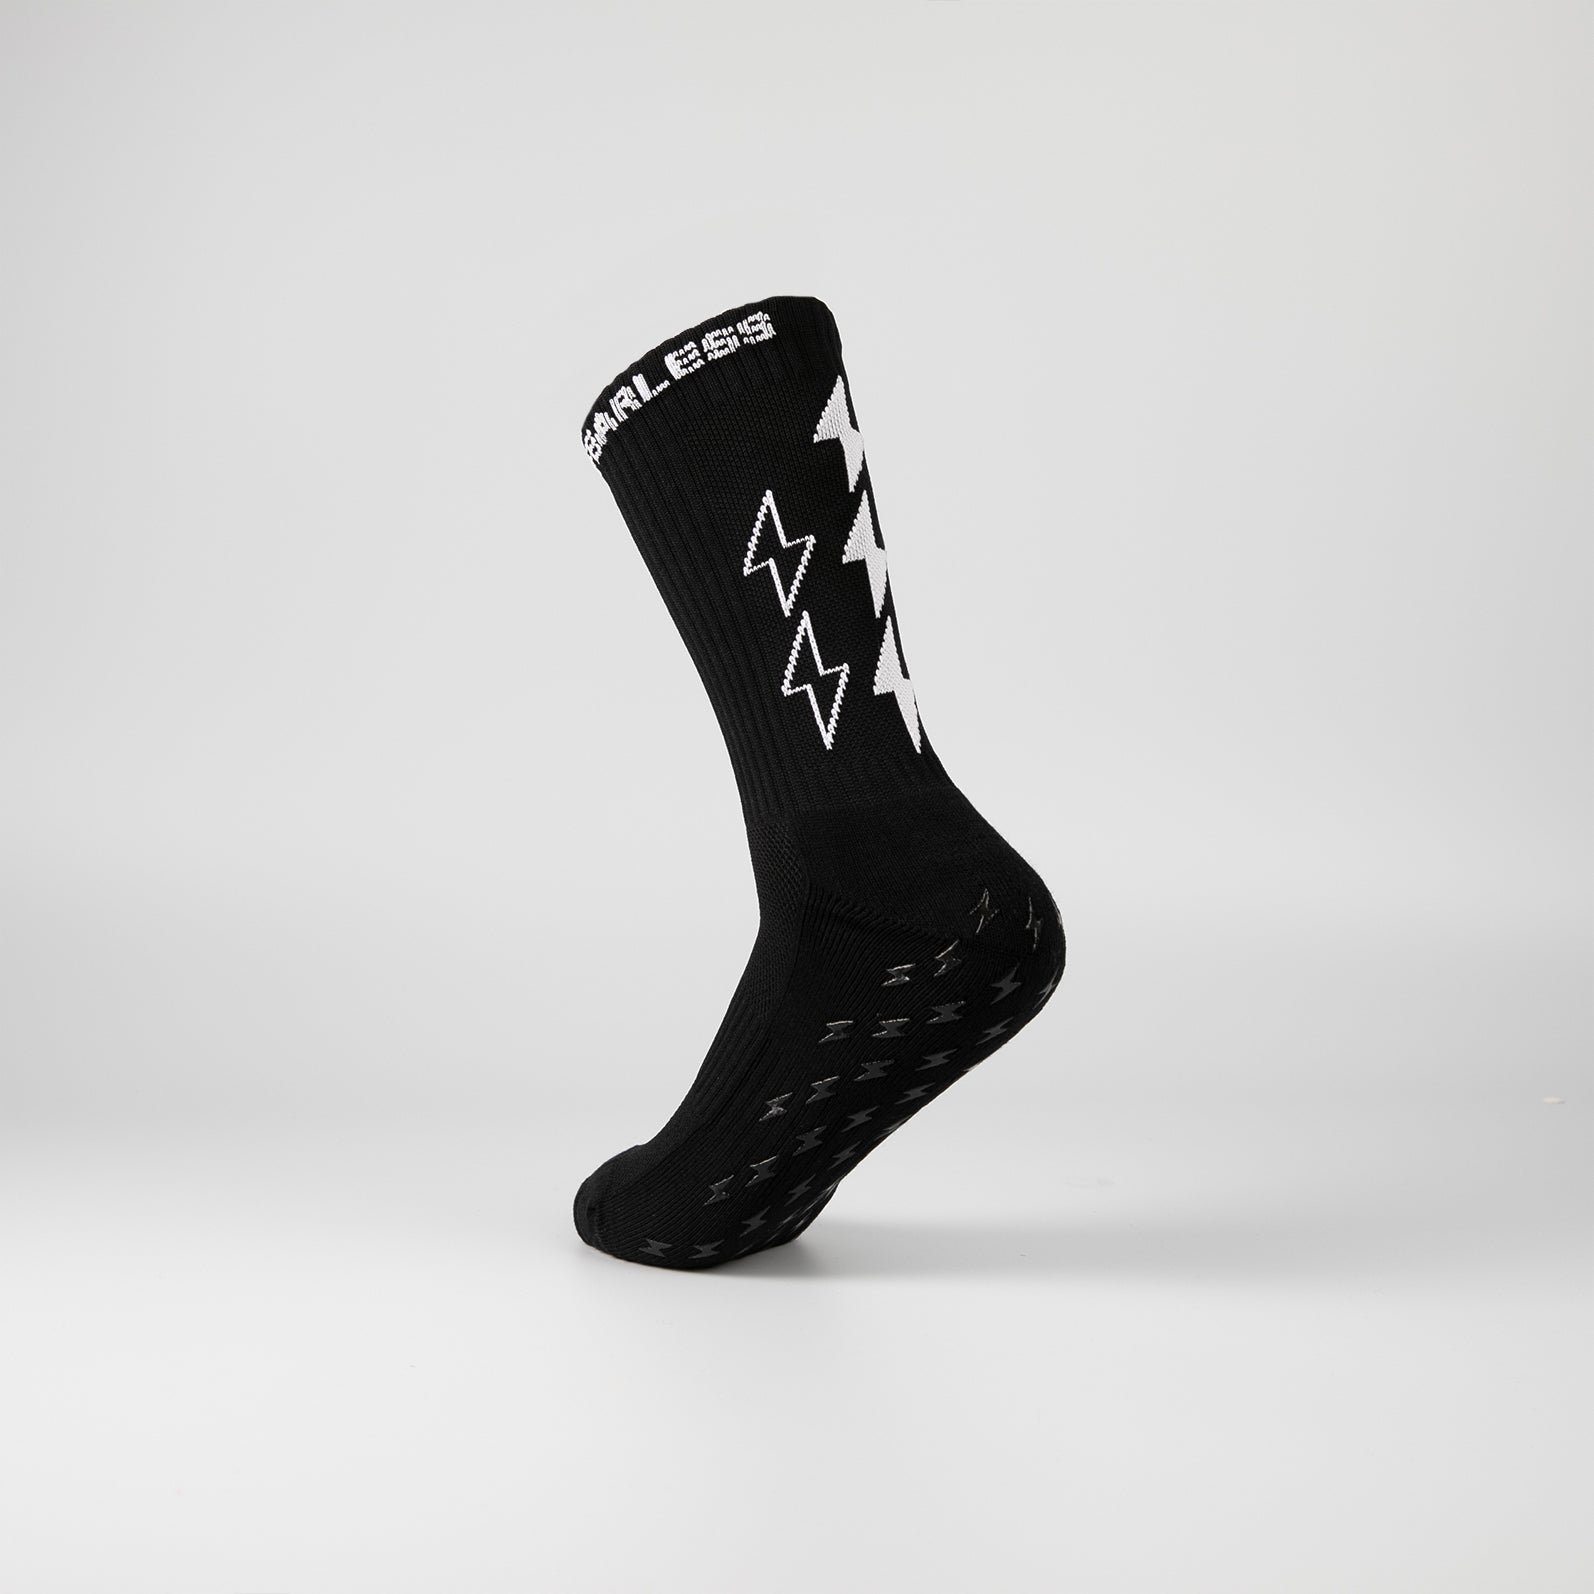 Fearless grip socks - SPEED